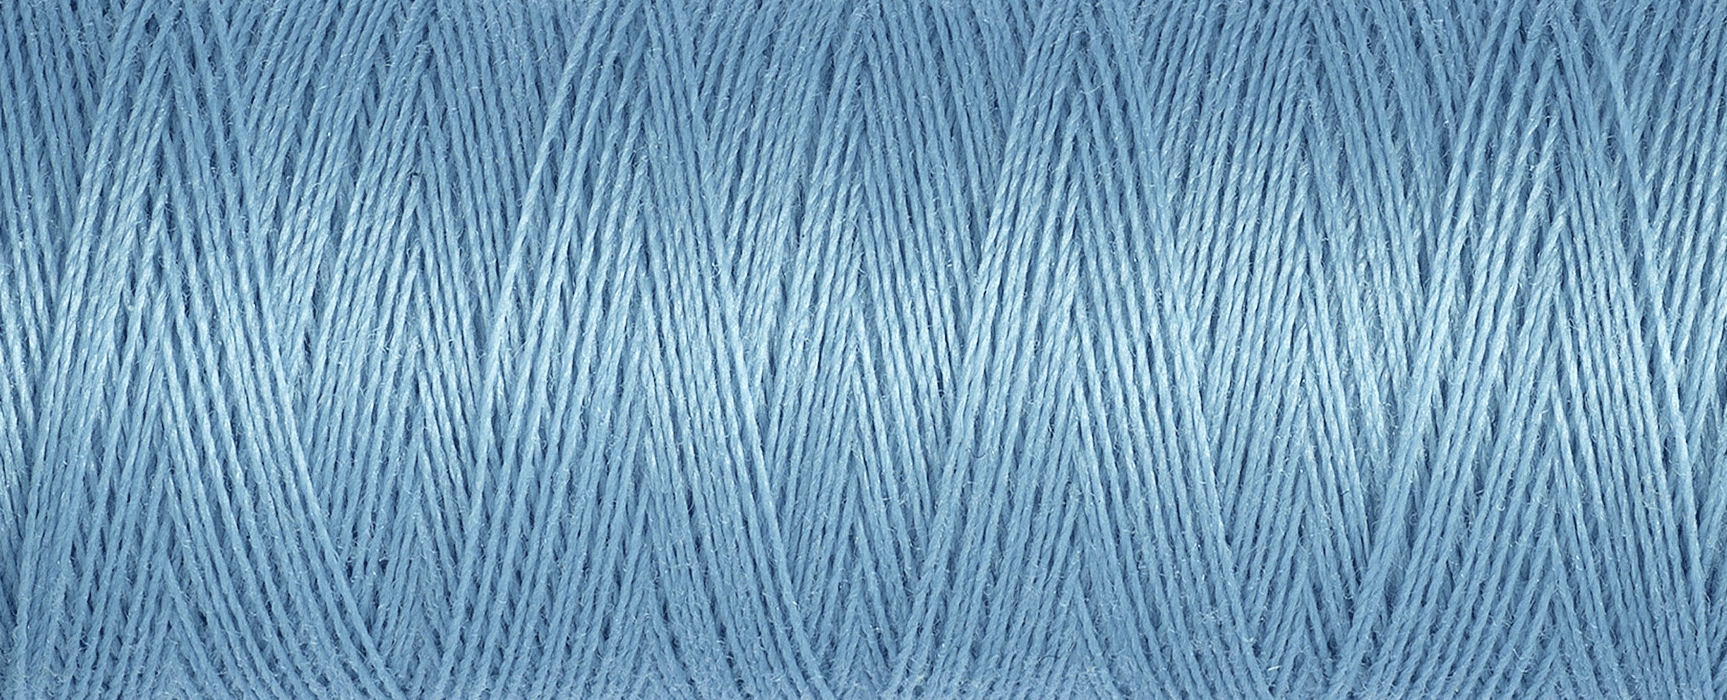 Gutermann Sew-All Thread - 1000M (143)-Thread-Jelly Fabrics